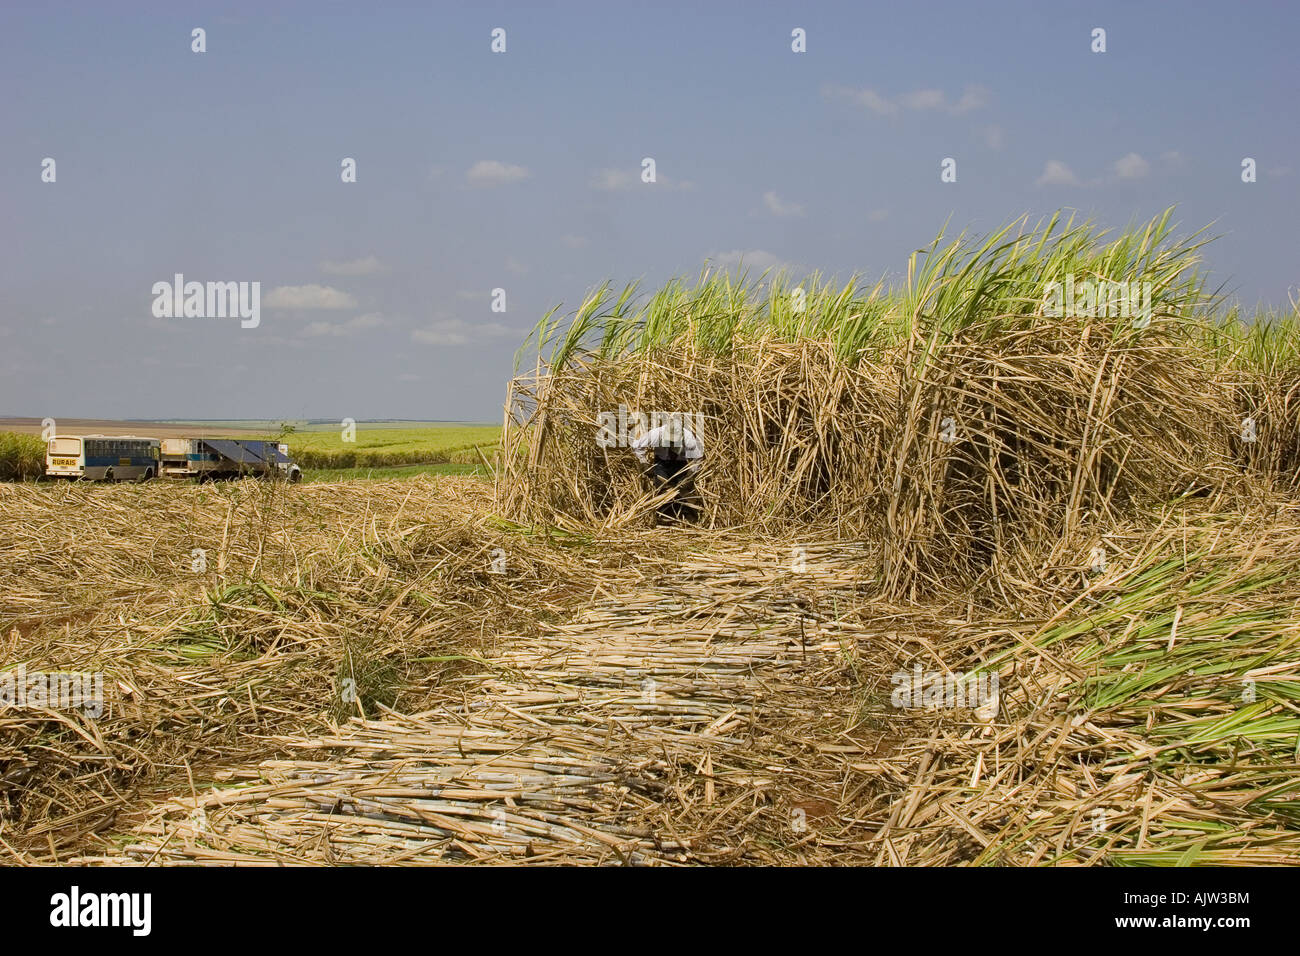 Man cutting sugar cane to produce methanol in Sao Paulo state - Brazil Stock Photo